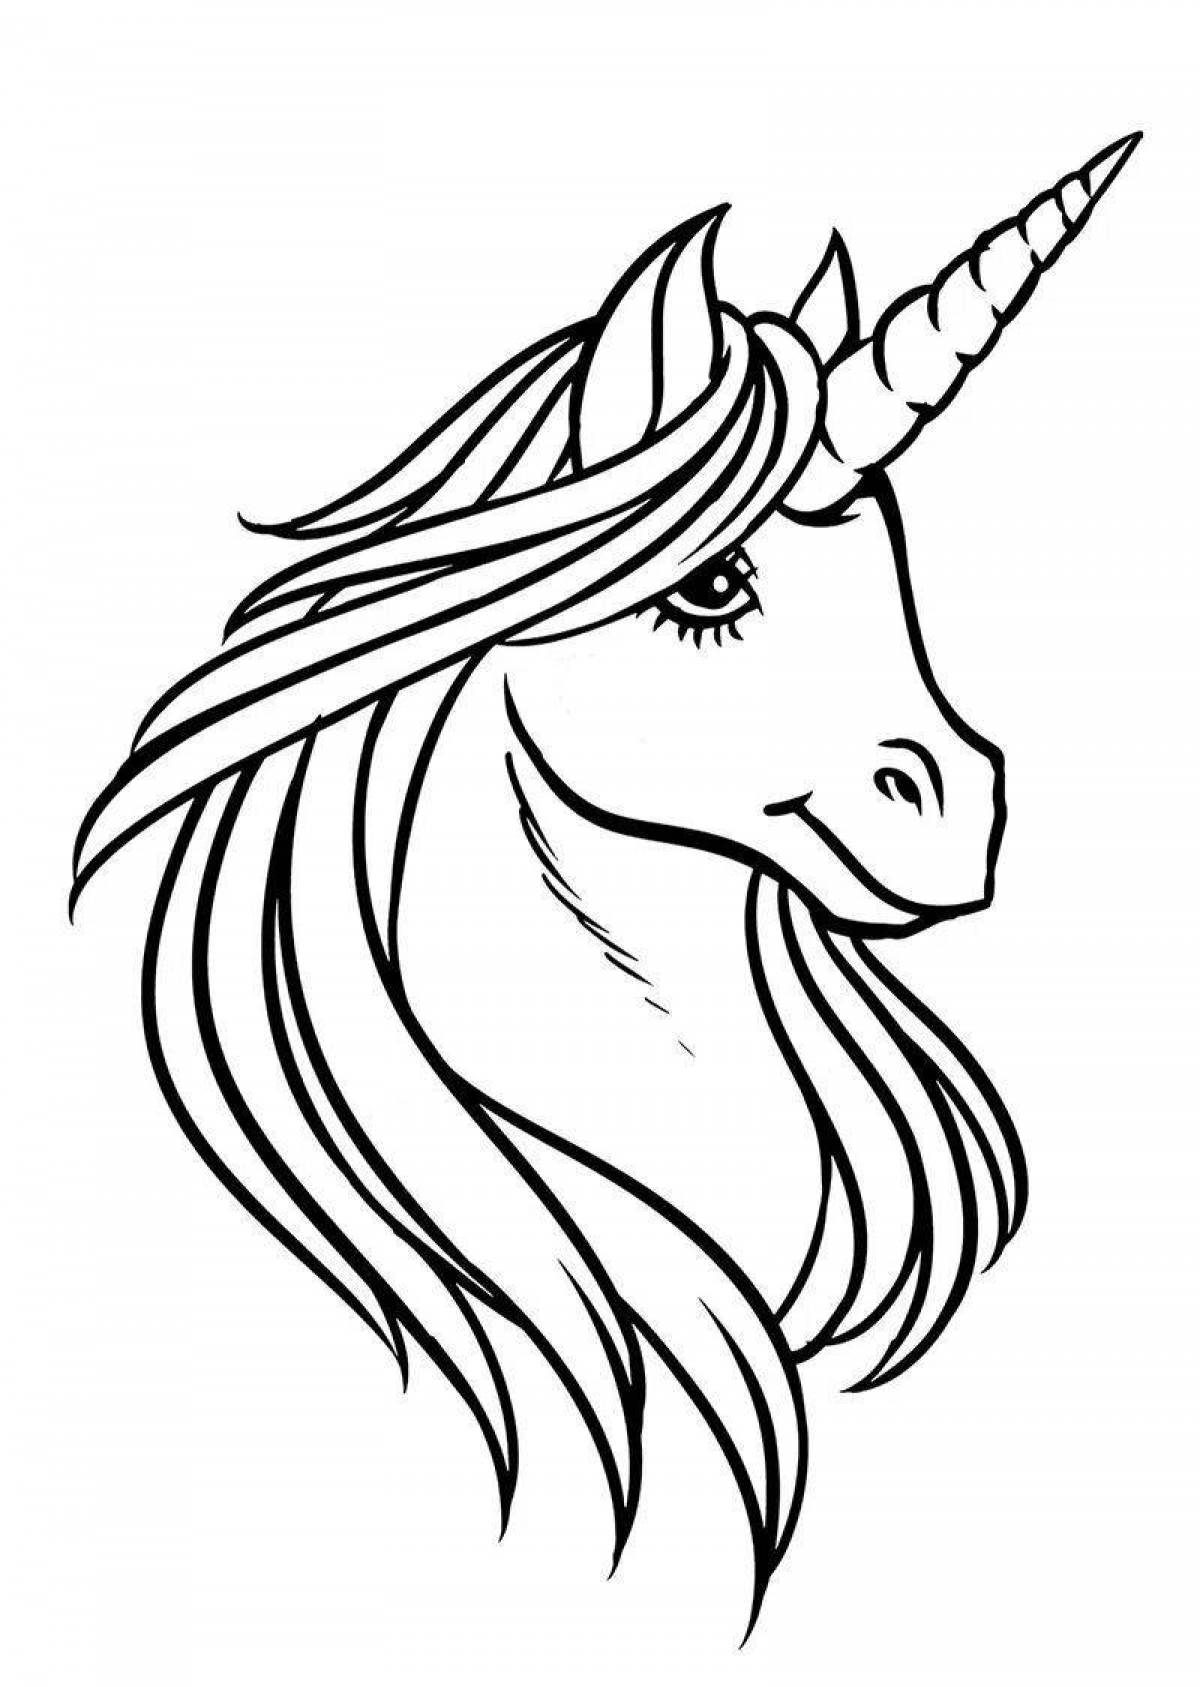 Charming unicorn head coloring book